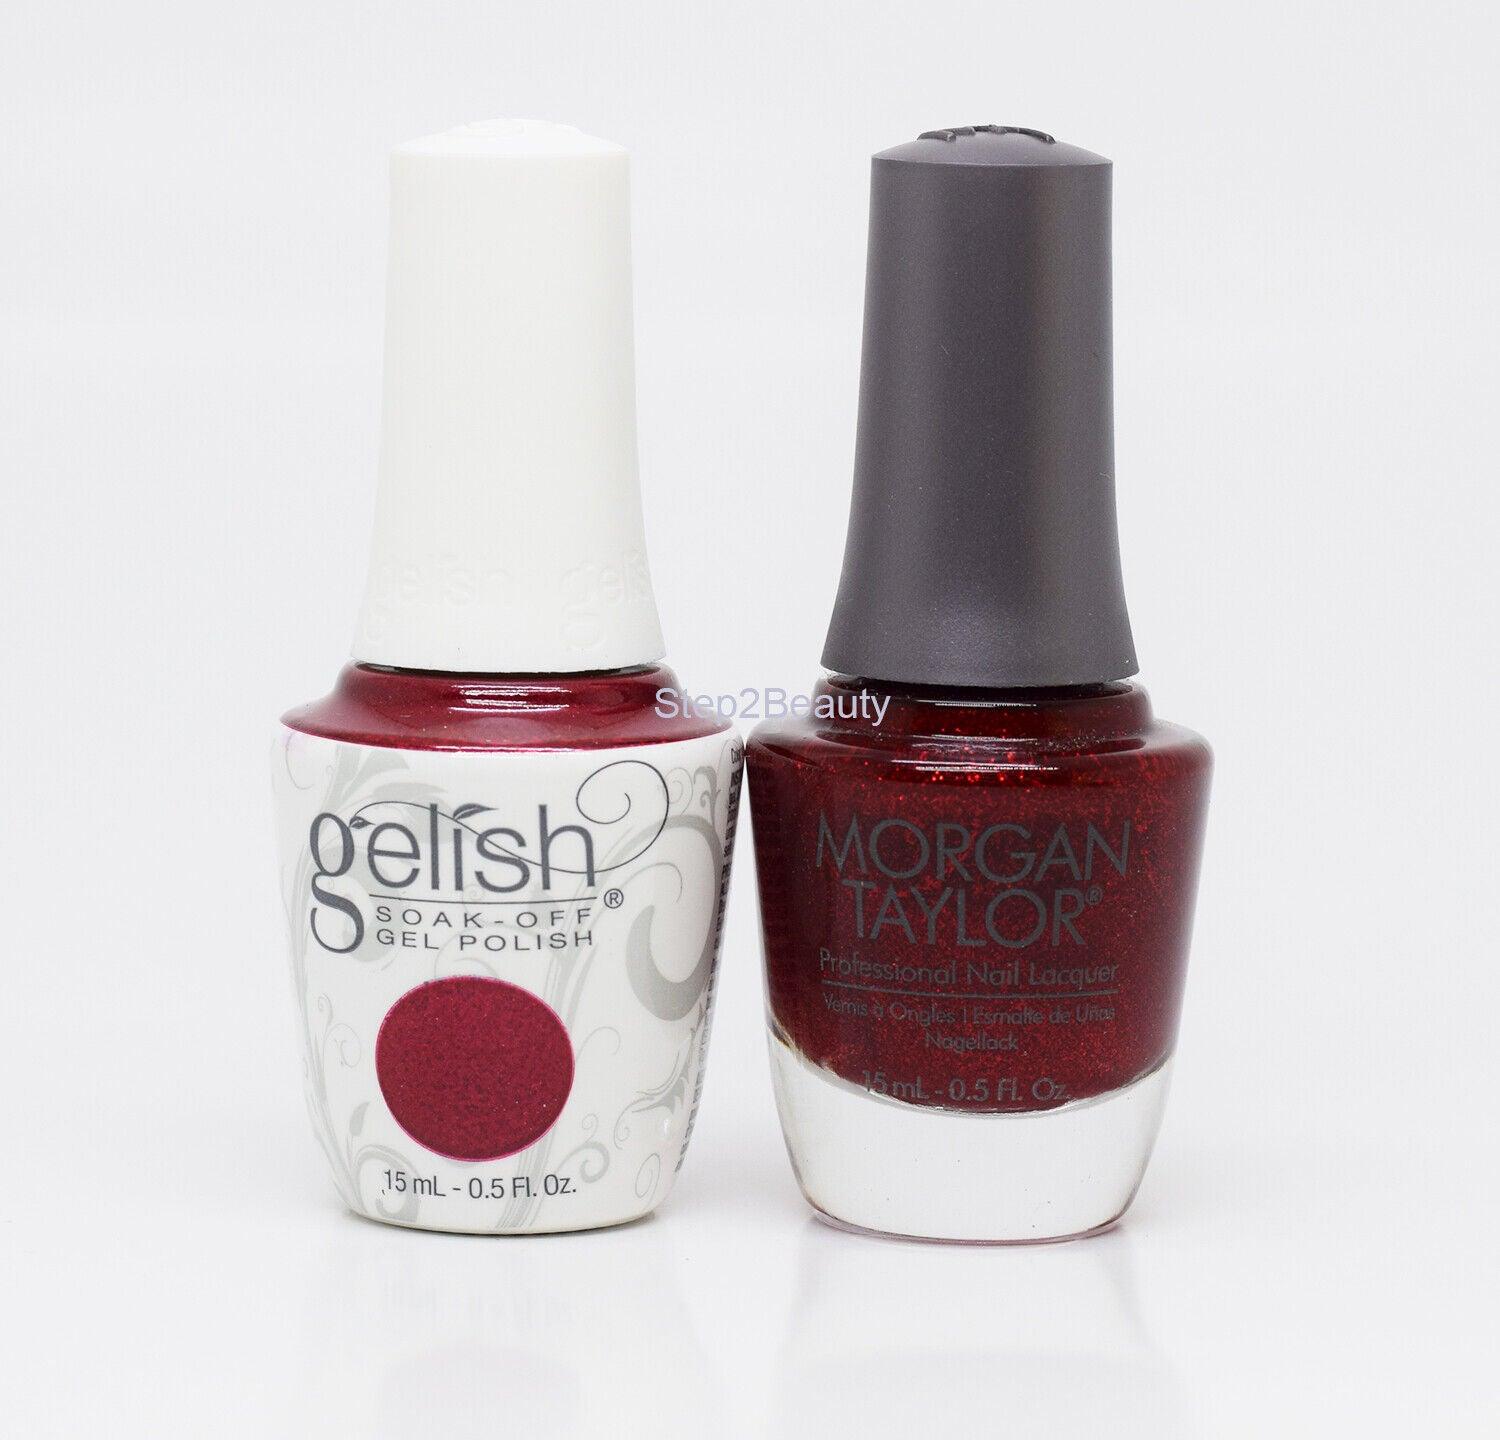 Gelish DUO Soak Off Gel Polish + Morgan Taylor Nail Lacquer - #842 Good Gossip